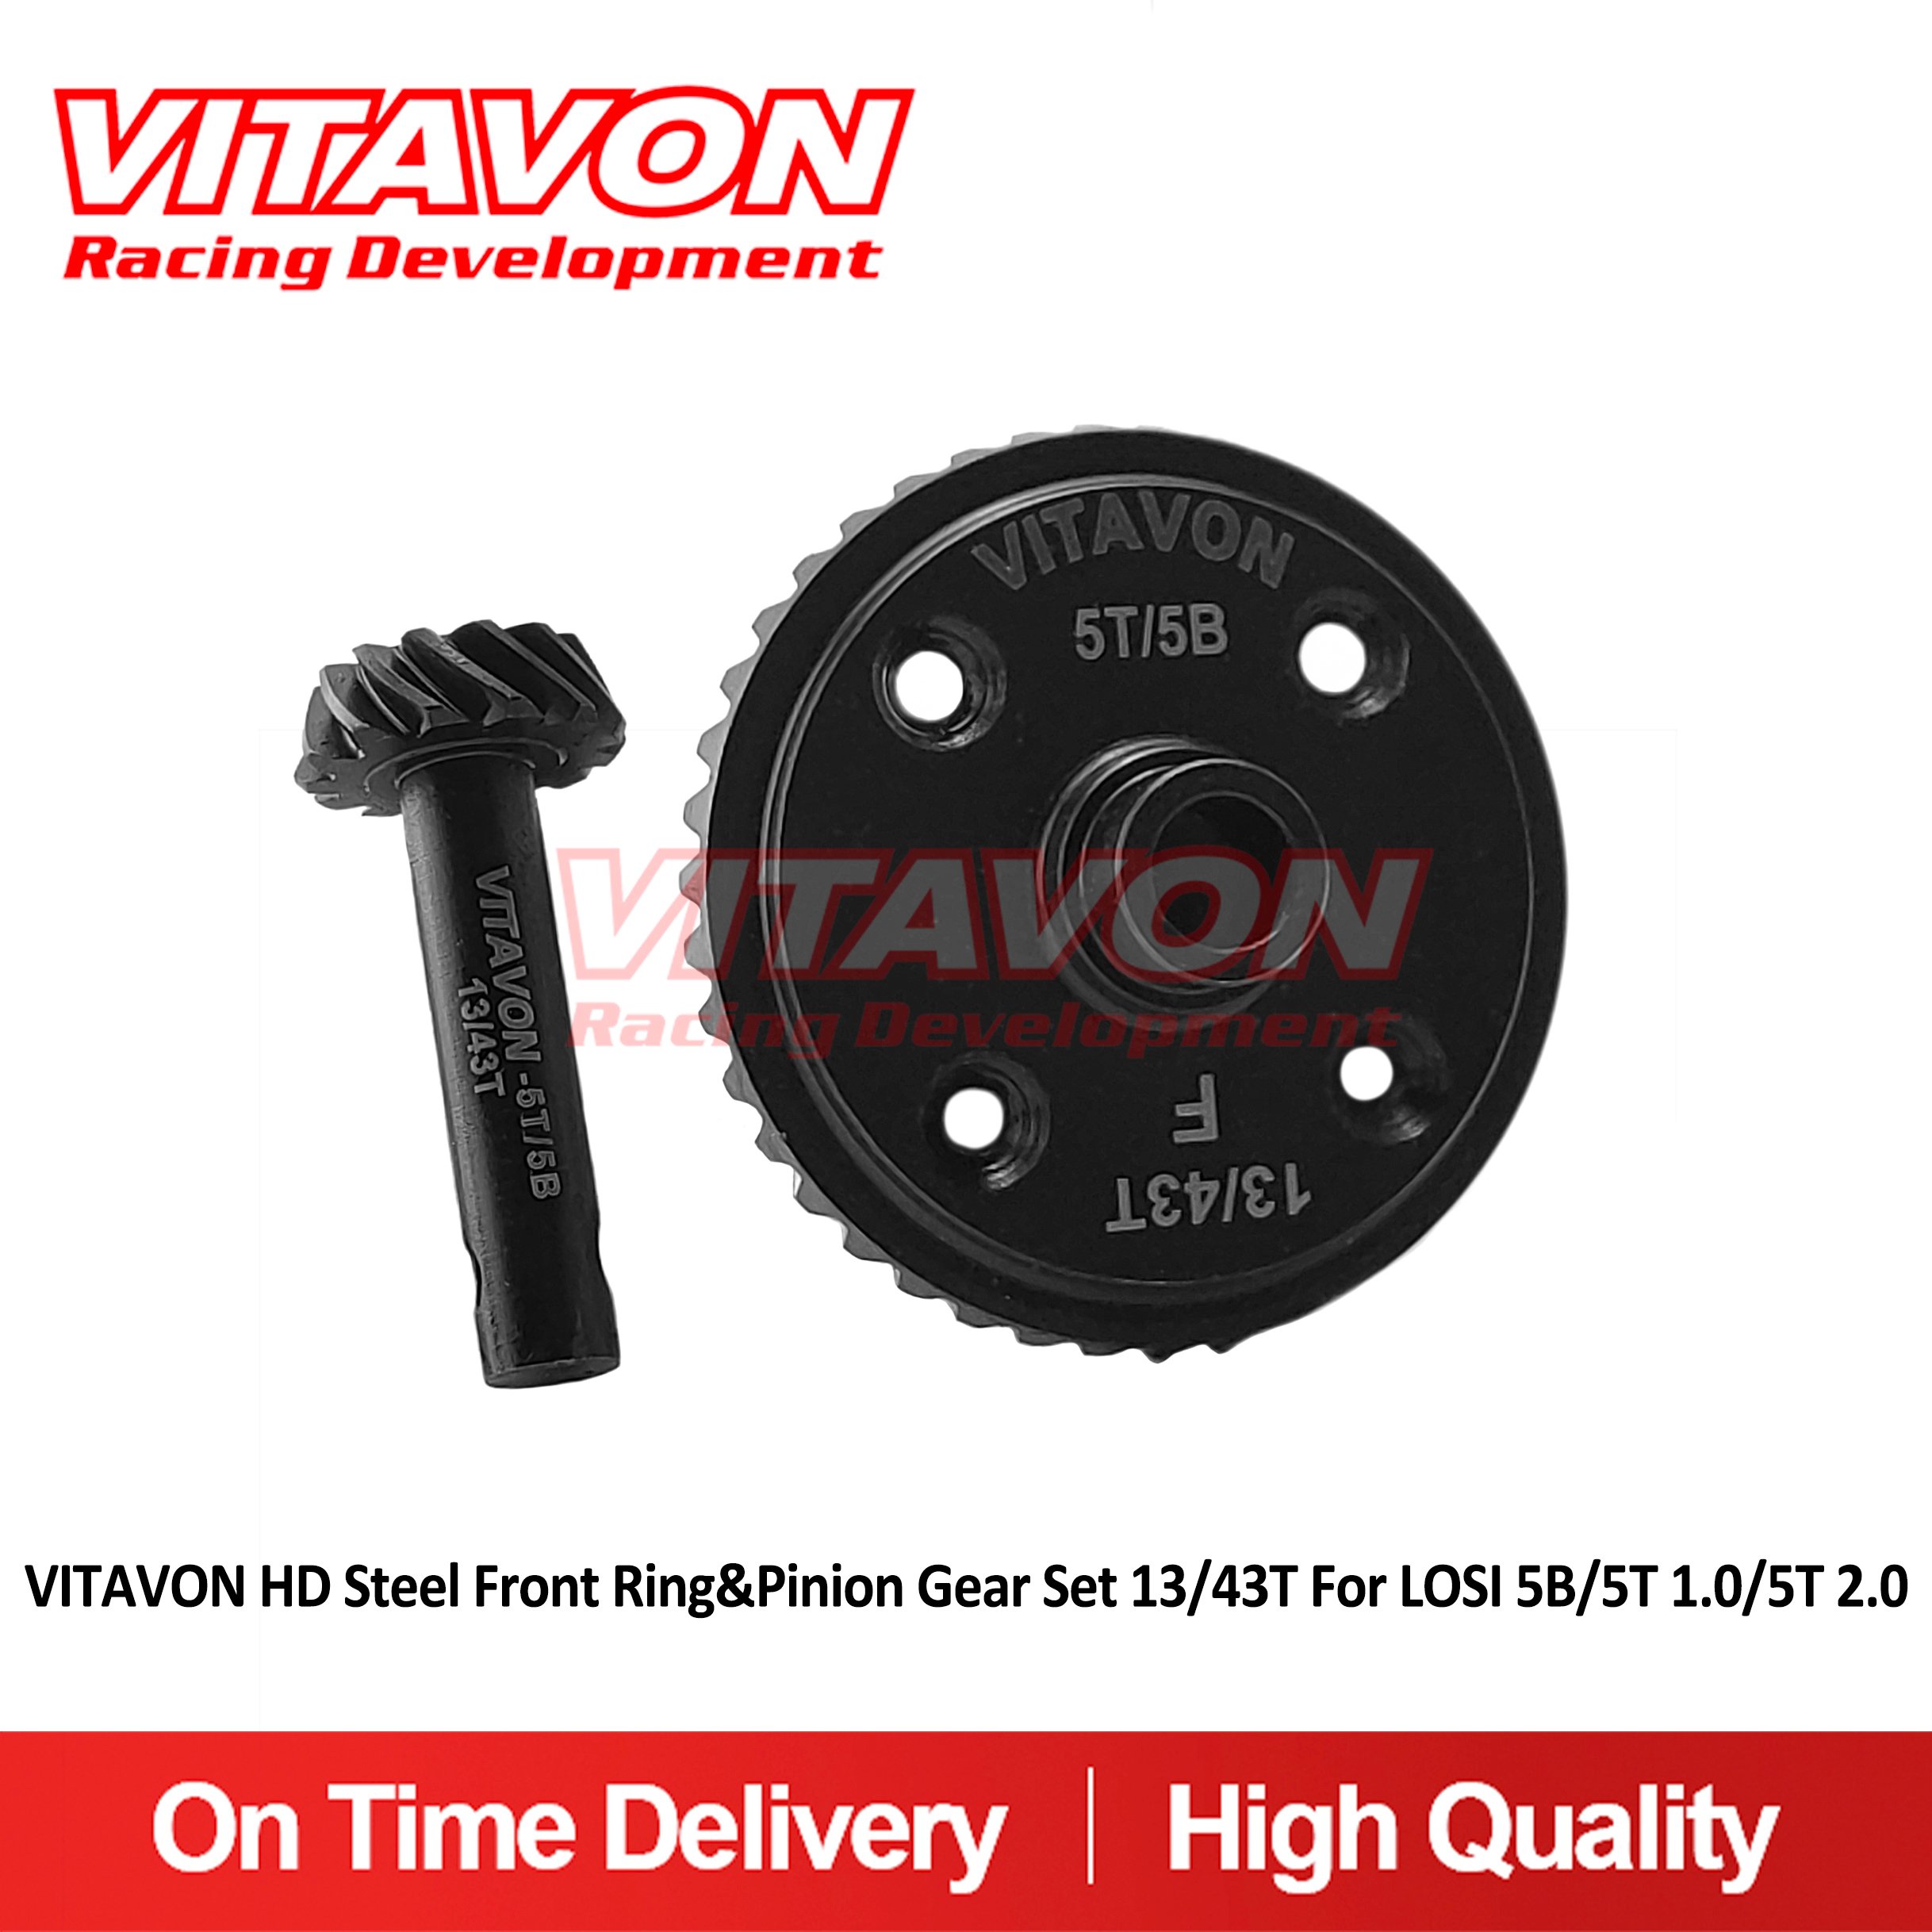 VITAVON HD Steel Front Ring&Pinion Gear Set 13/43T For LOSI 5B/5T 1.0/5T 2.0